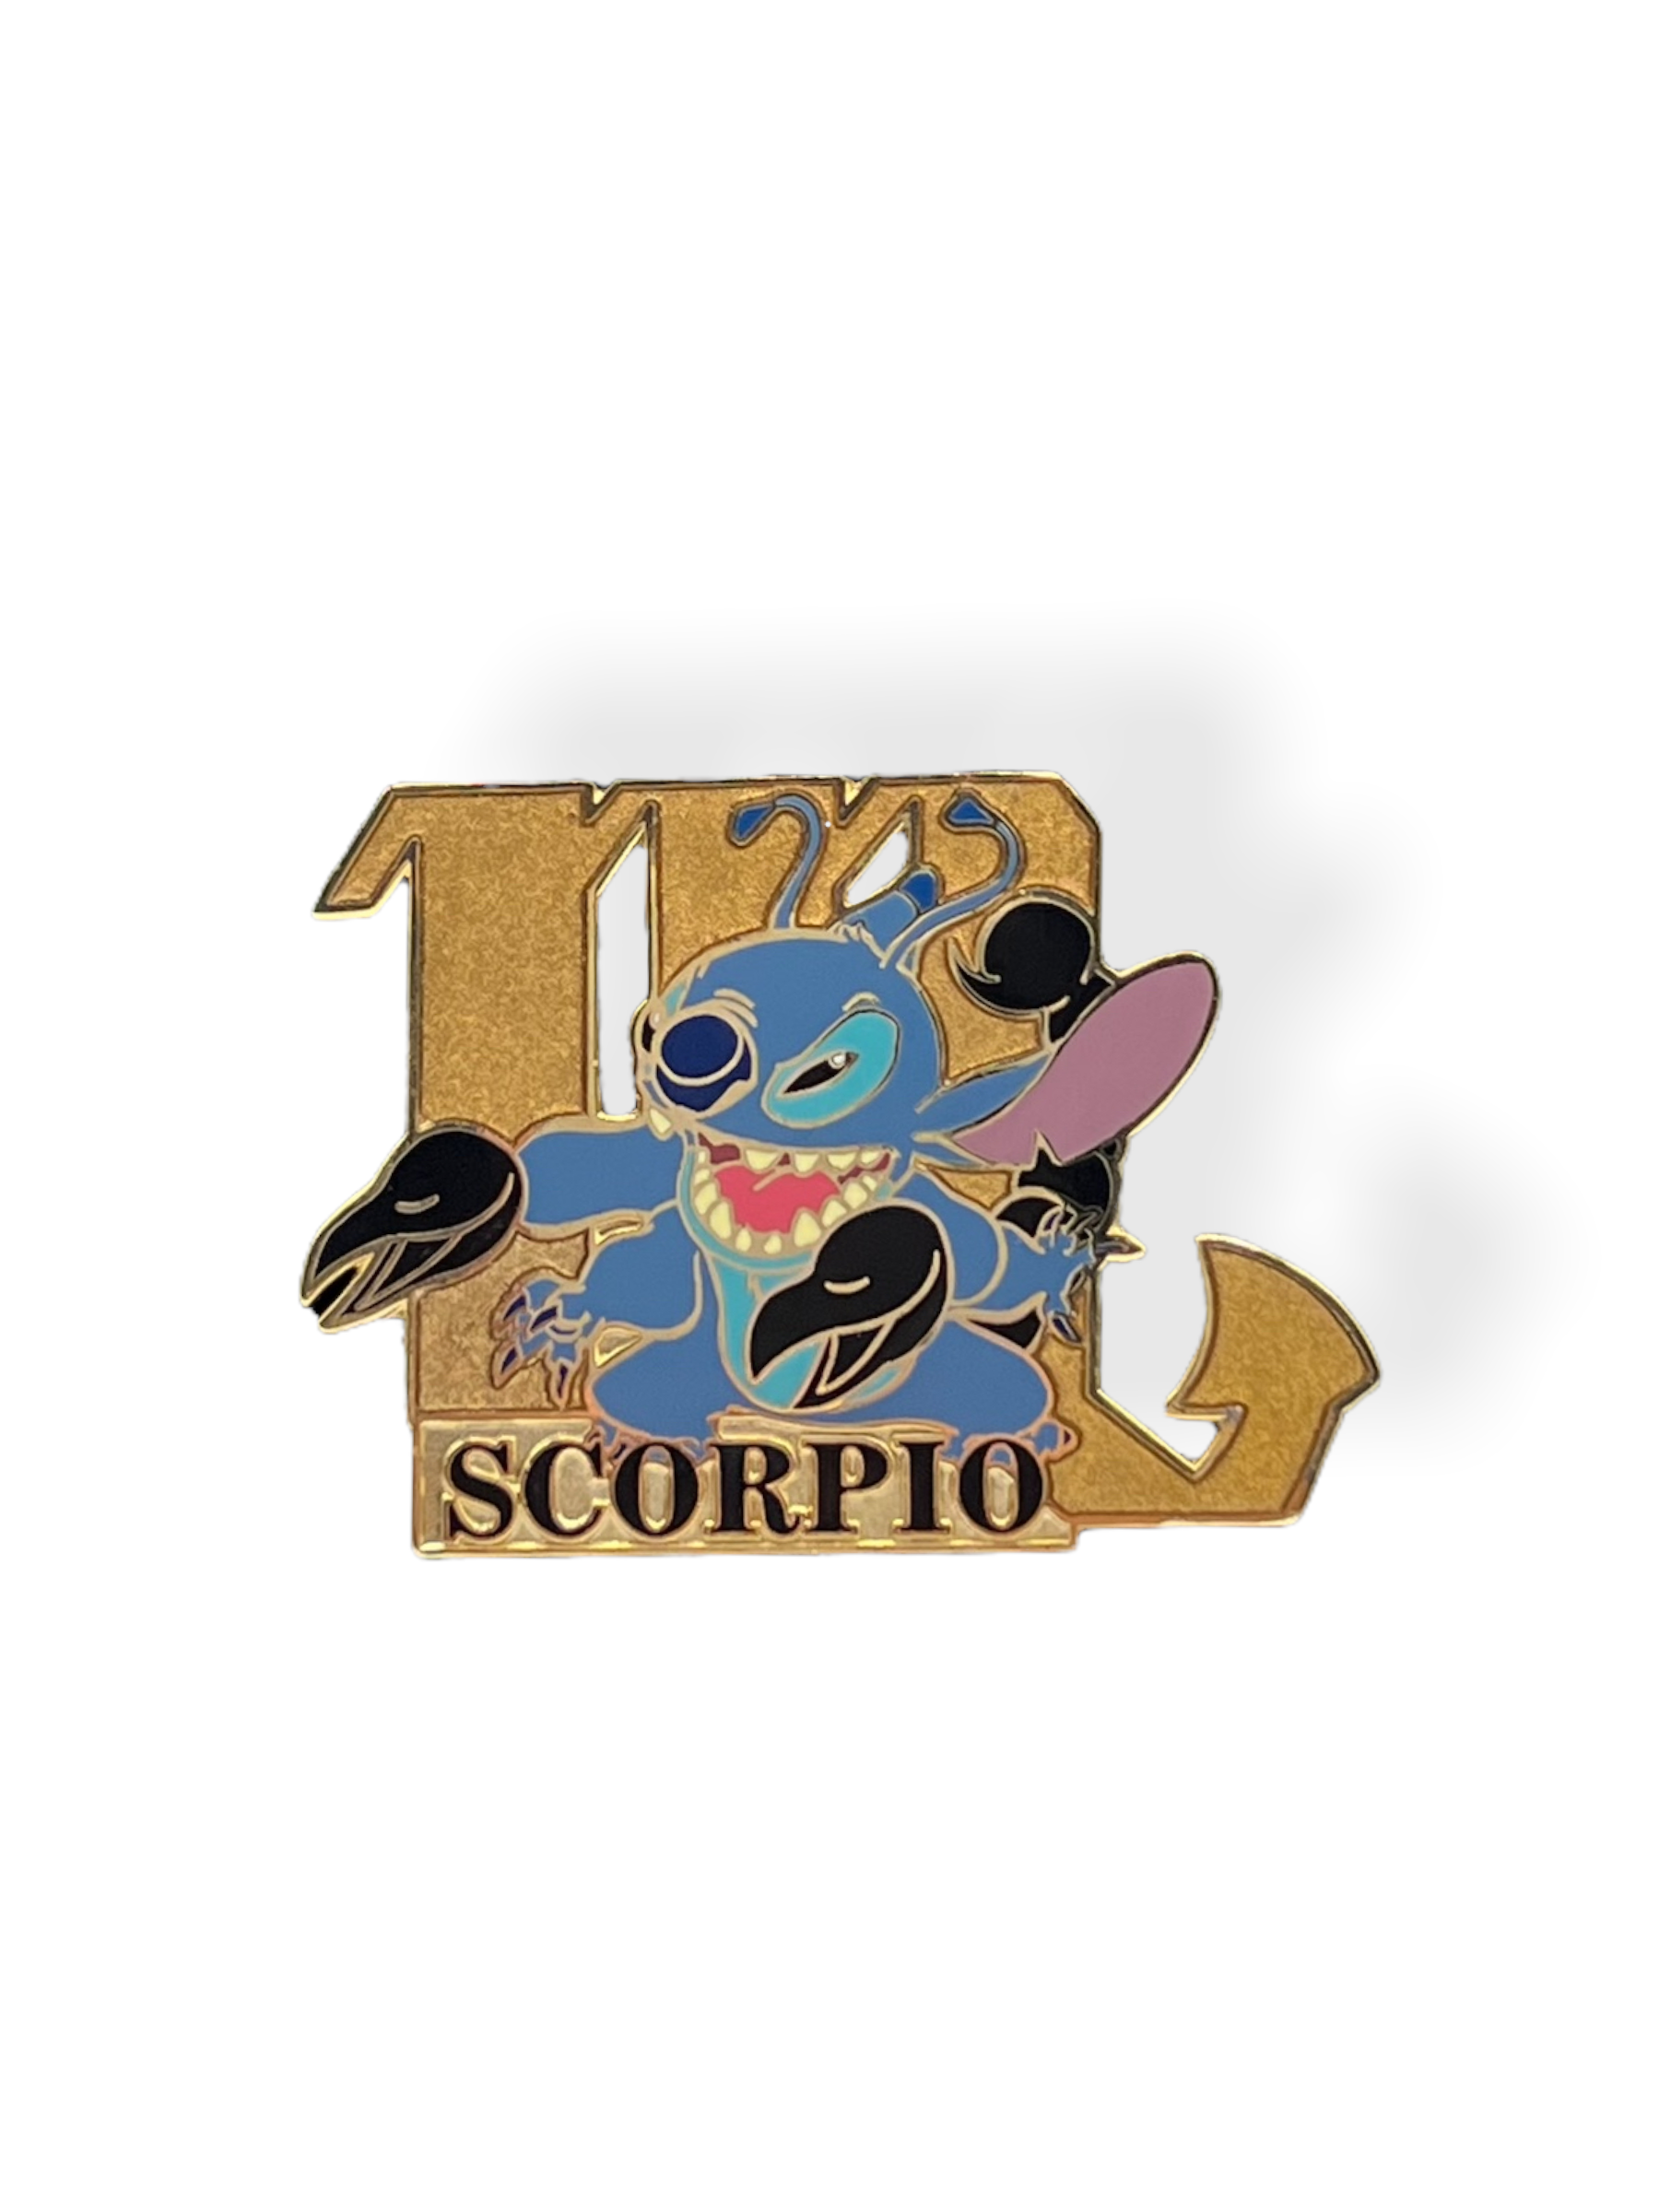 Disney Auctions Stitch Zodiac Scorpio Pin